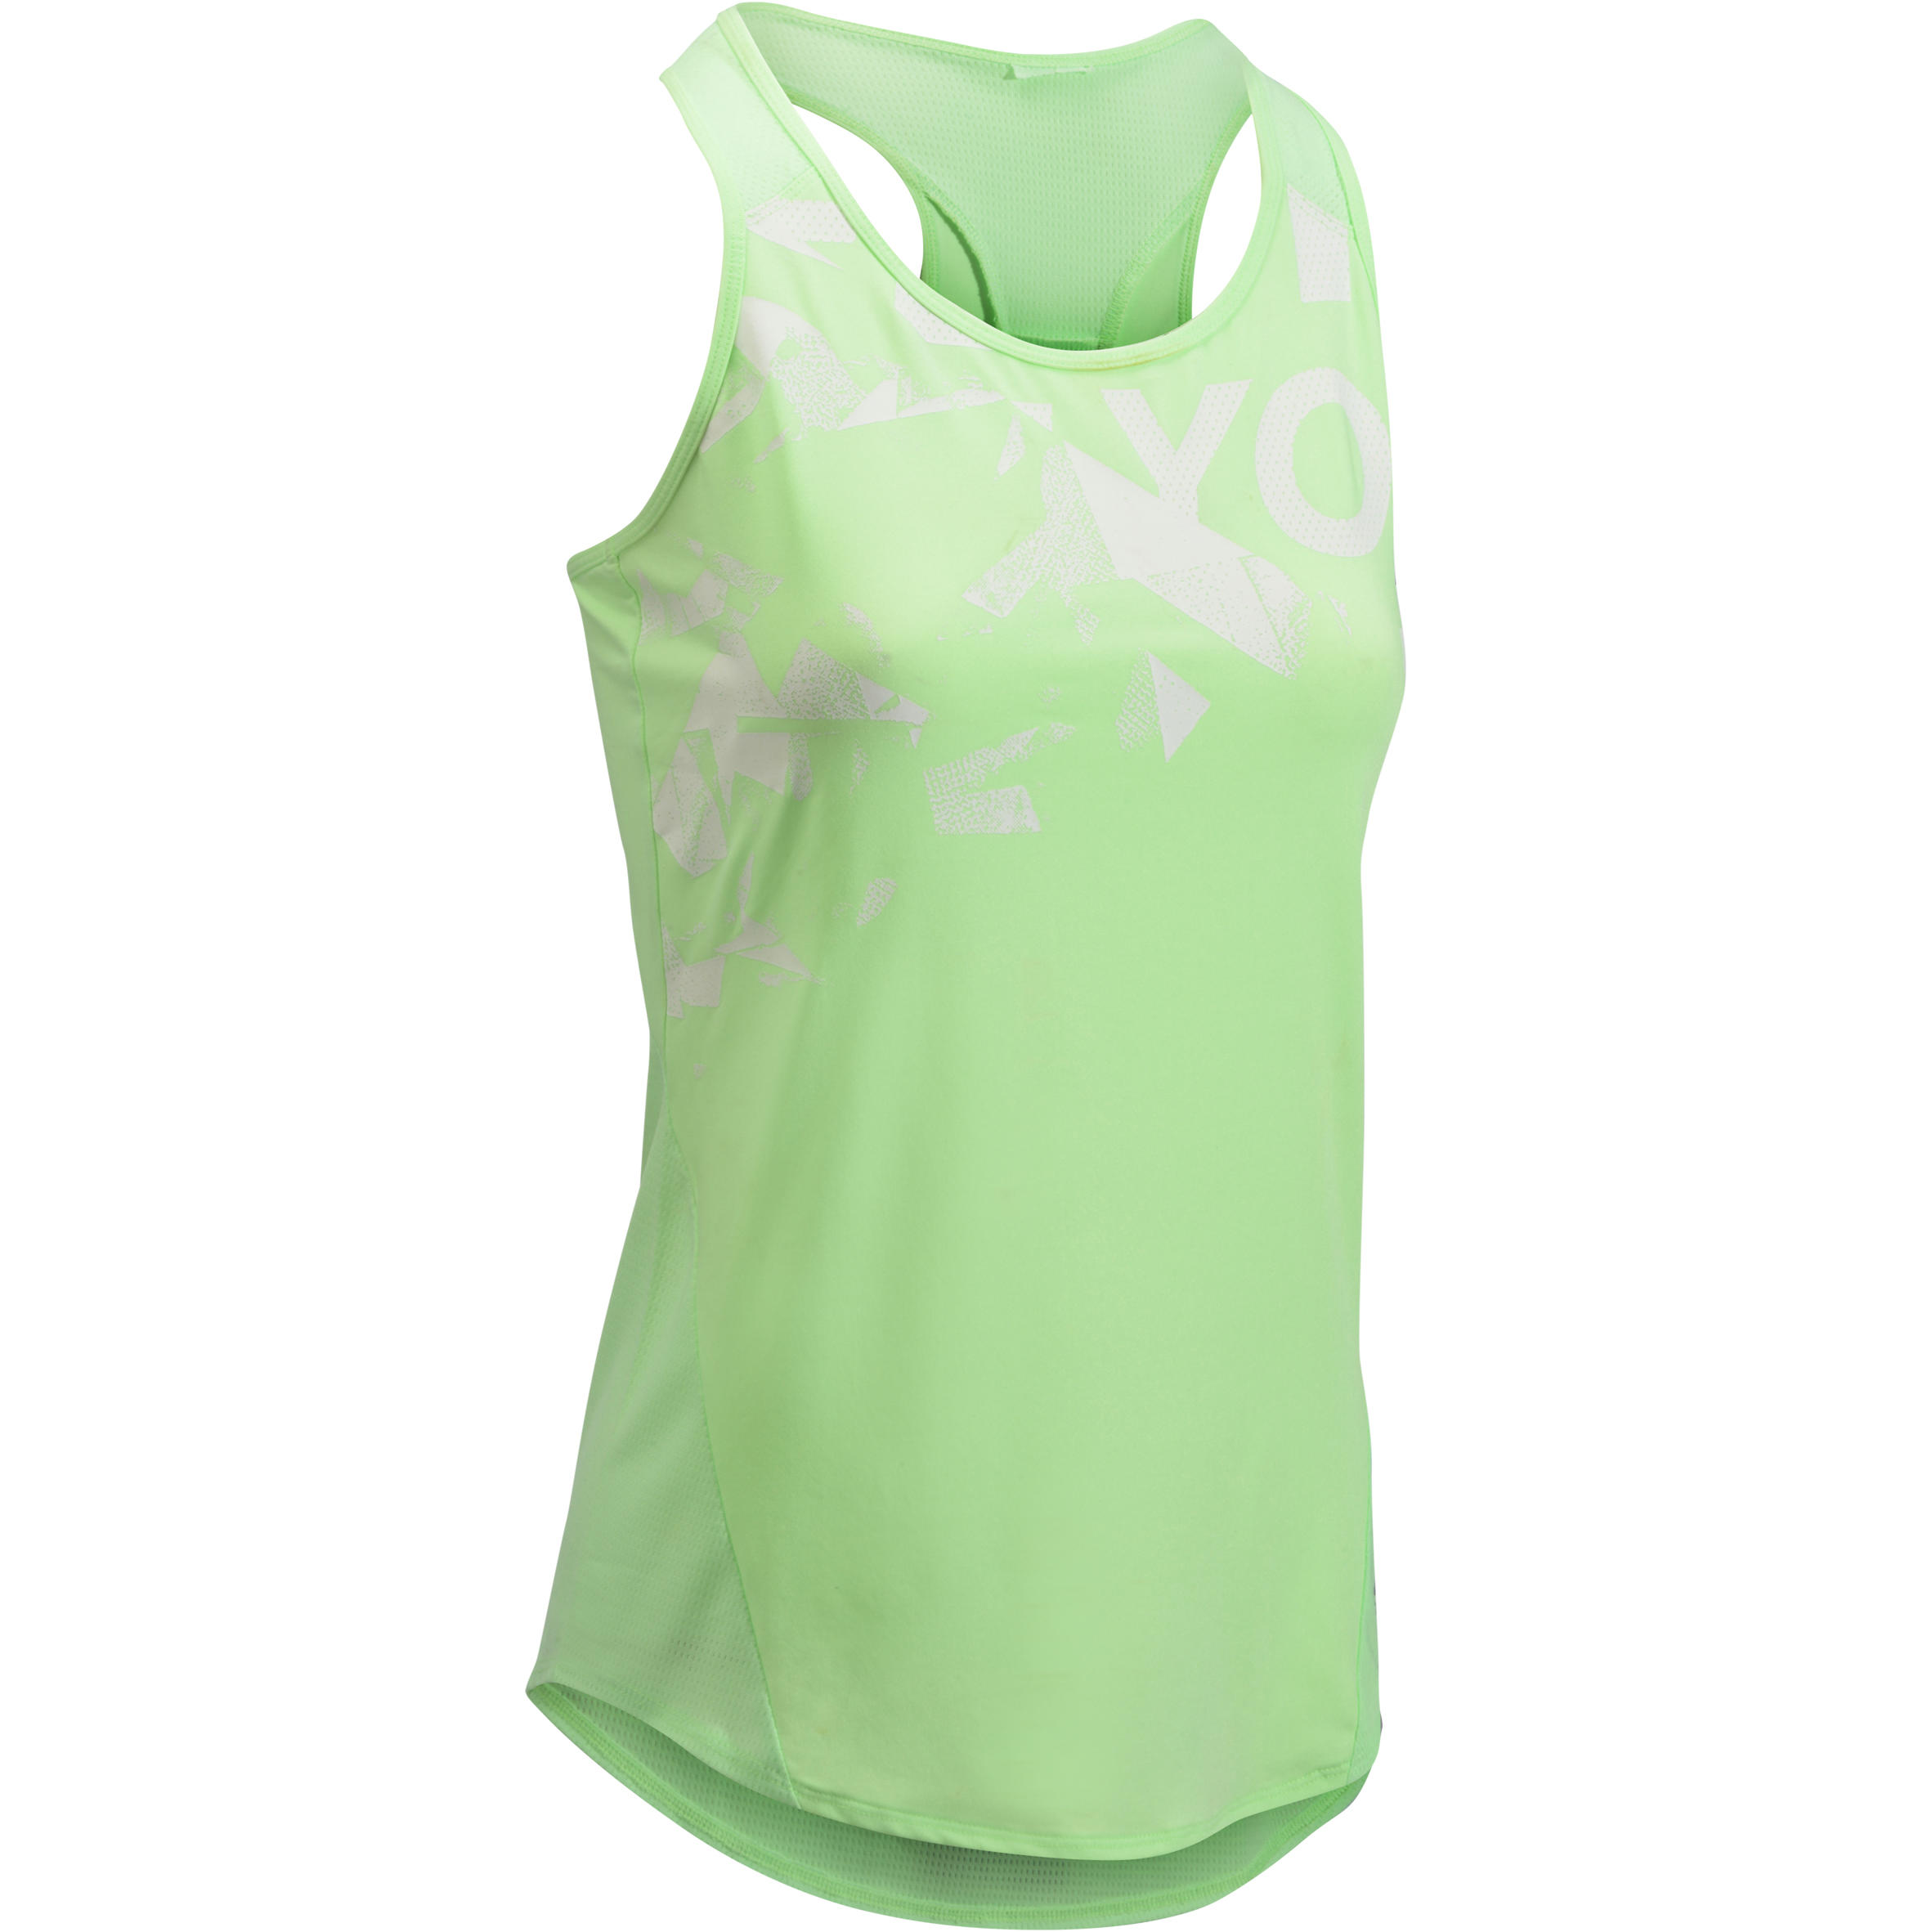 DOMYOS 120 Women's Cardio Fitness Tank Top - Mint Green With Print Design